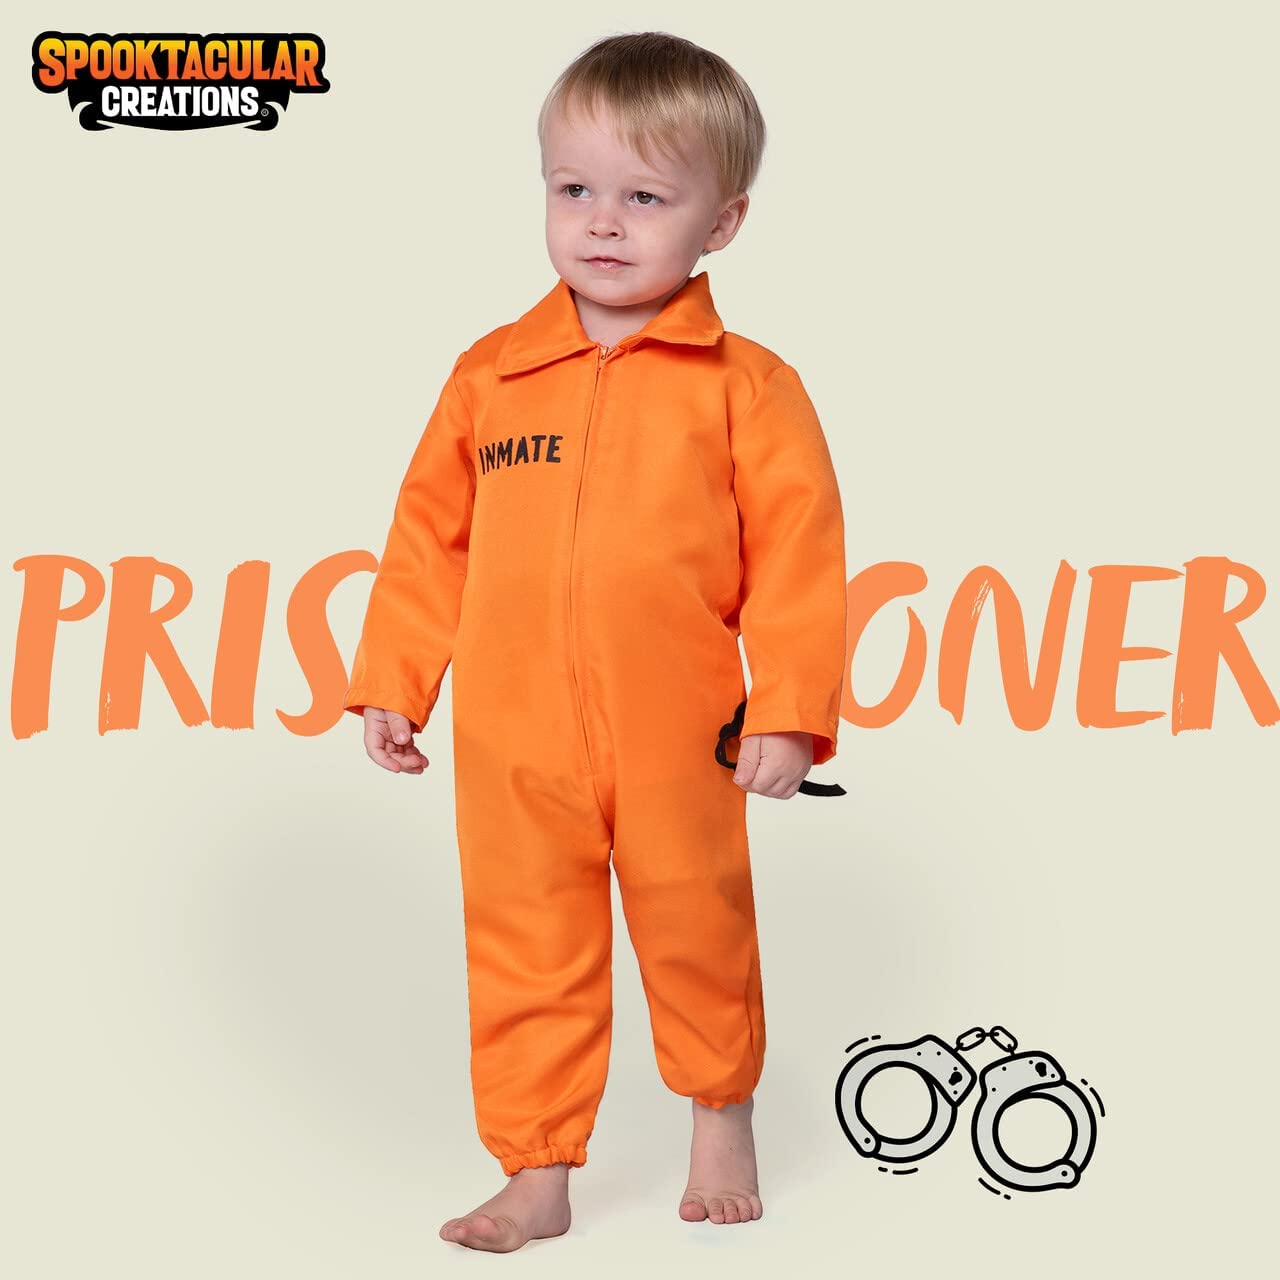 Spooktacular Baby modern orange prison uniform costume - Child